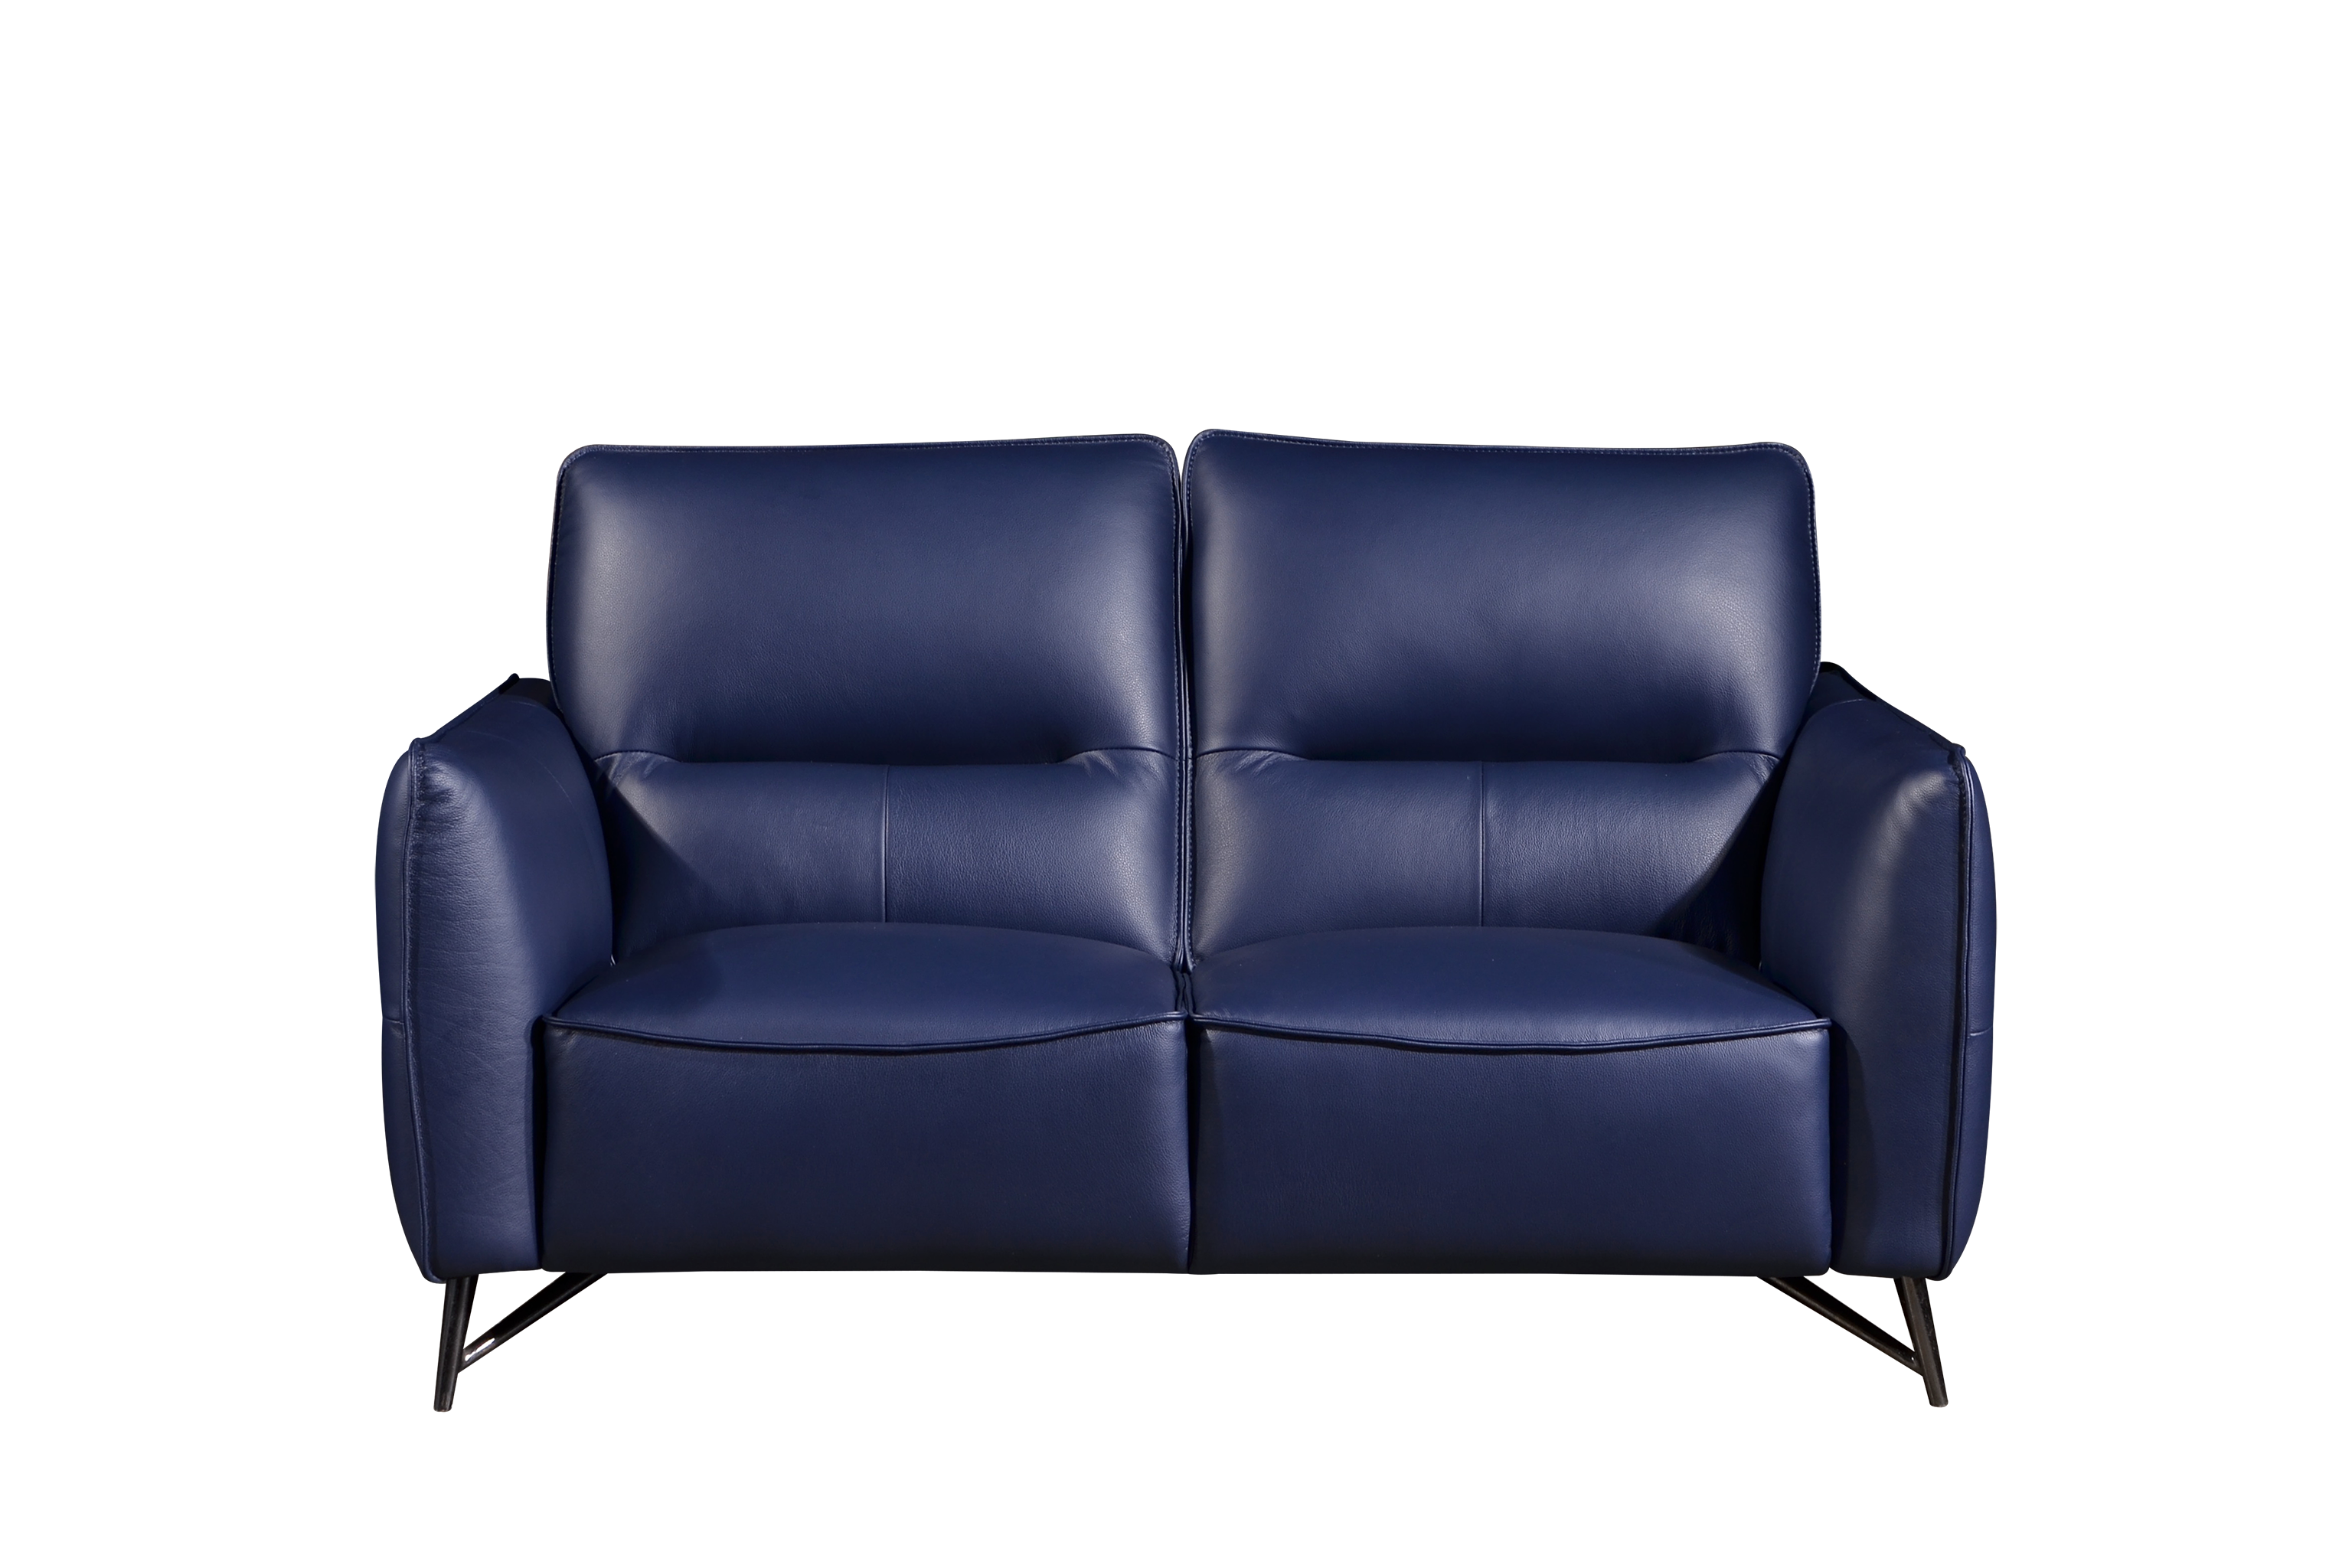 SORENA 2 Seater Sofa In Leather By Castilla